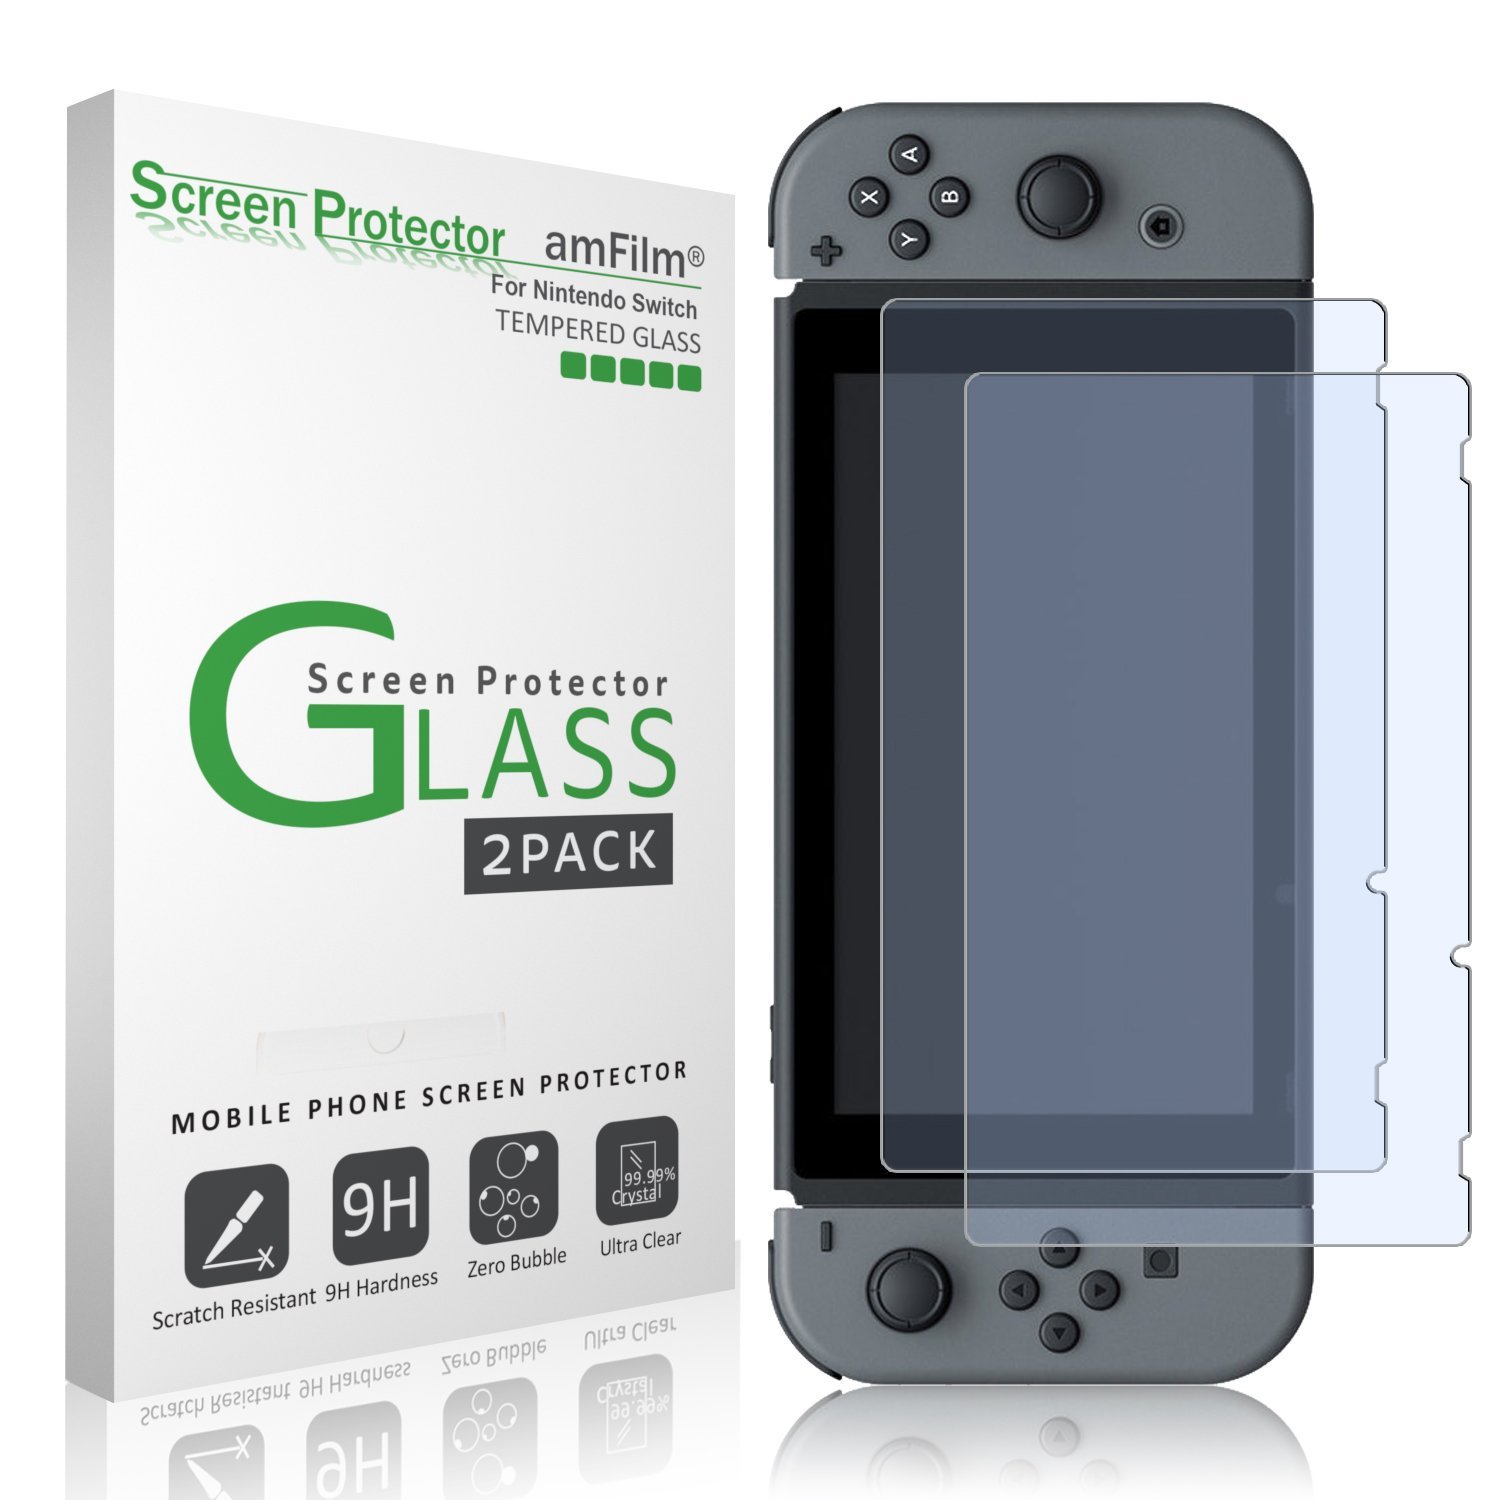 Op risico kosten parlement Nintendo Switch Screen Protector Glass (2-Pack), amFilm Nintendo Switch  Tempered Glass Screen Protector for Nintendo Switch 2017 - Walmart.com